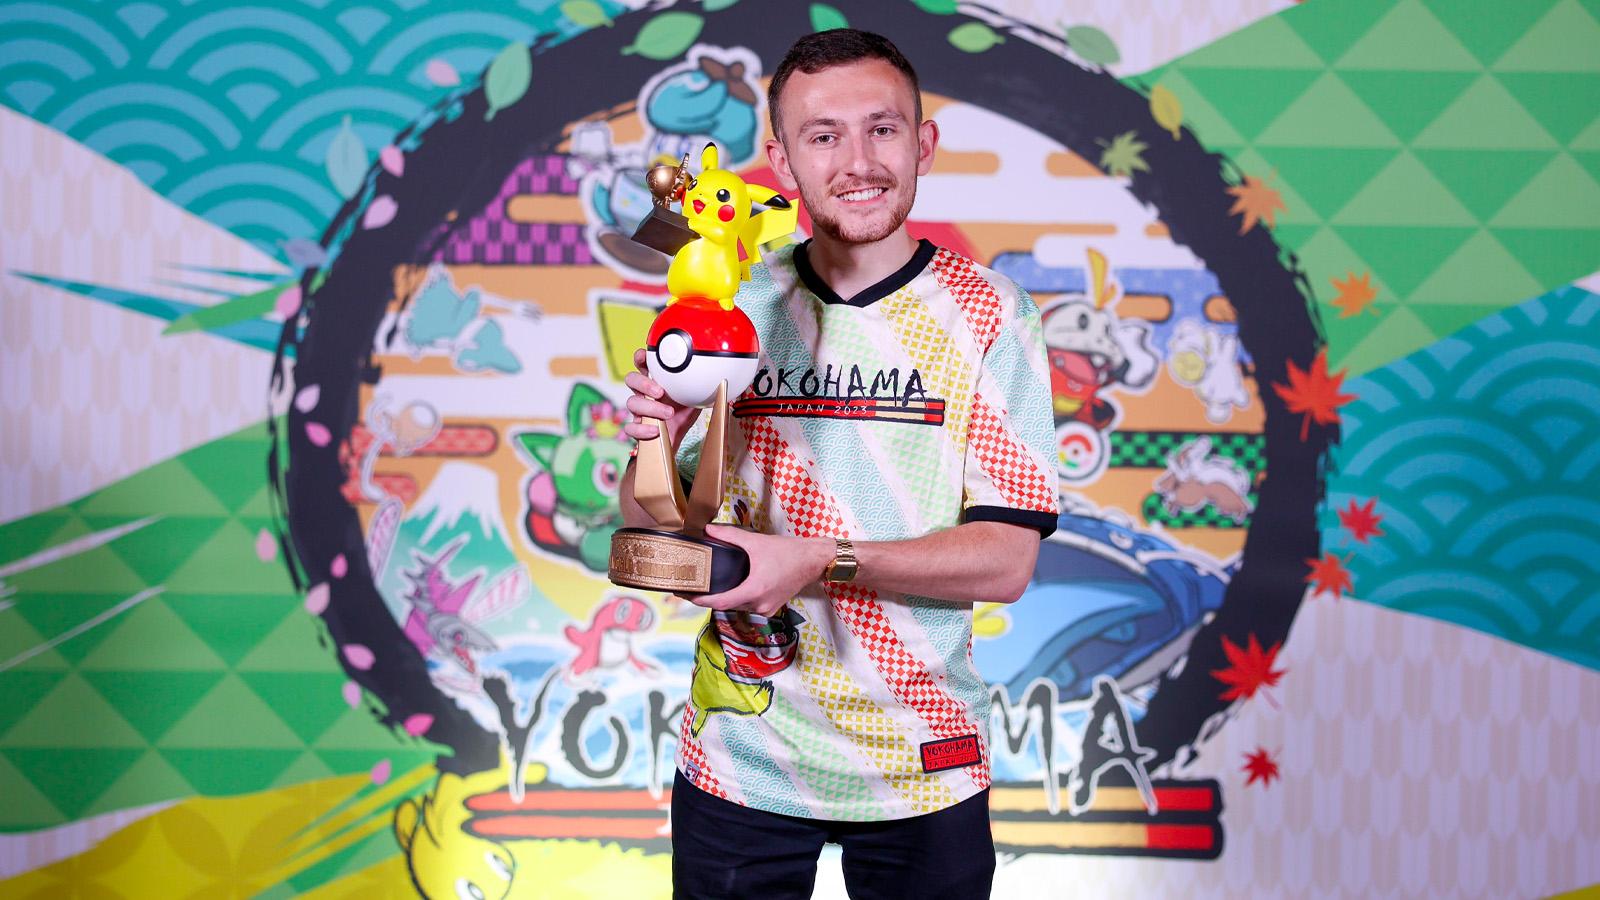 2014 Pokémon TCG World Championships Decks